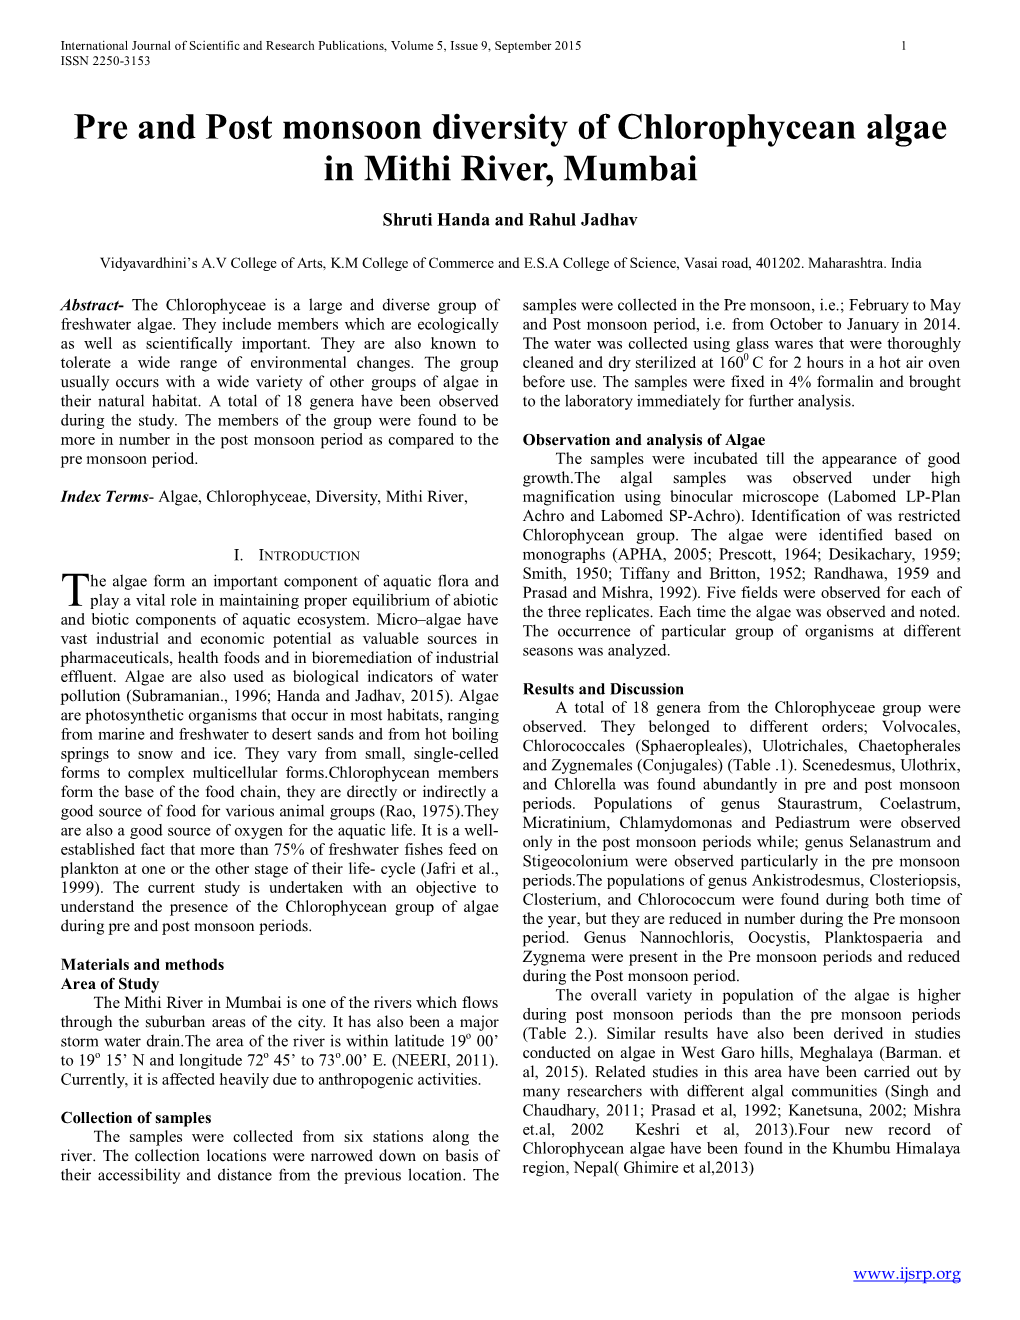 Pre and Post Monsoon Diversity of Chlorophycean Algae in Mithi River, Mumbai